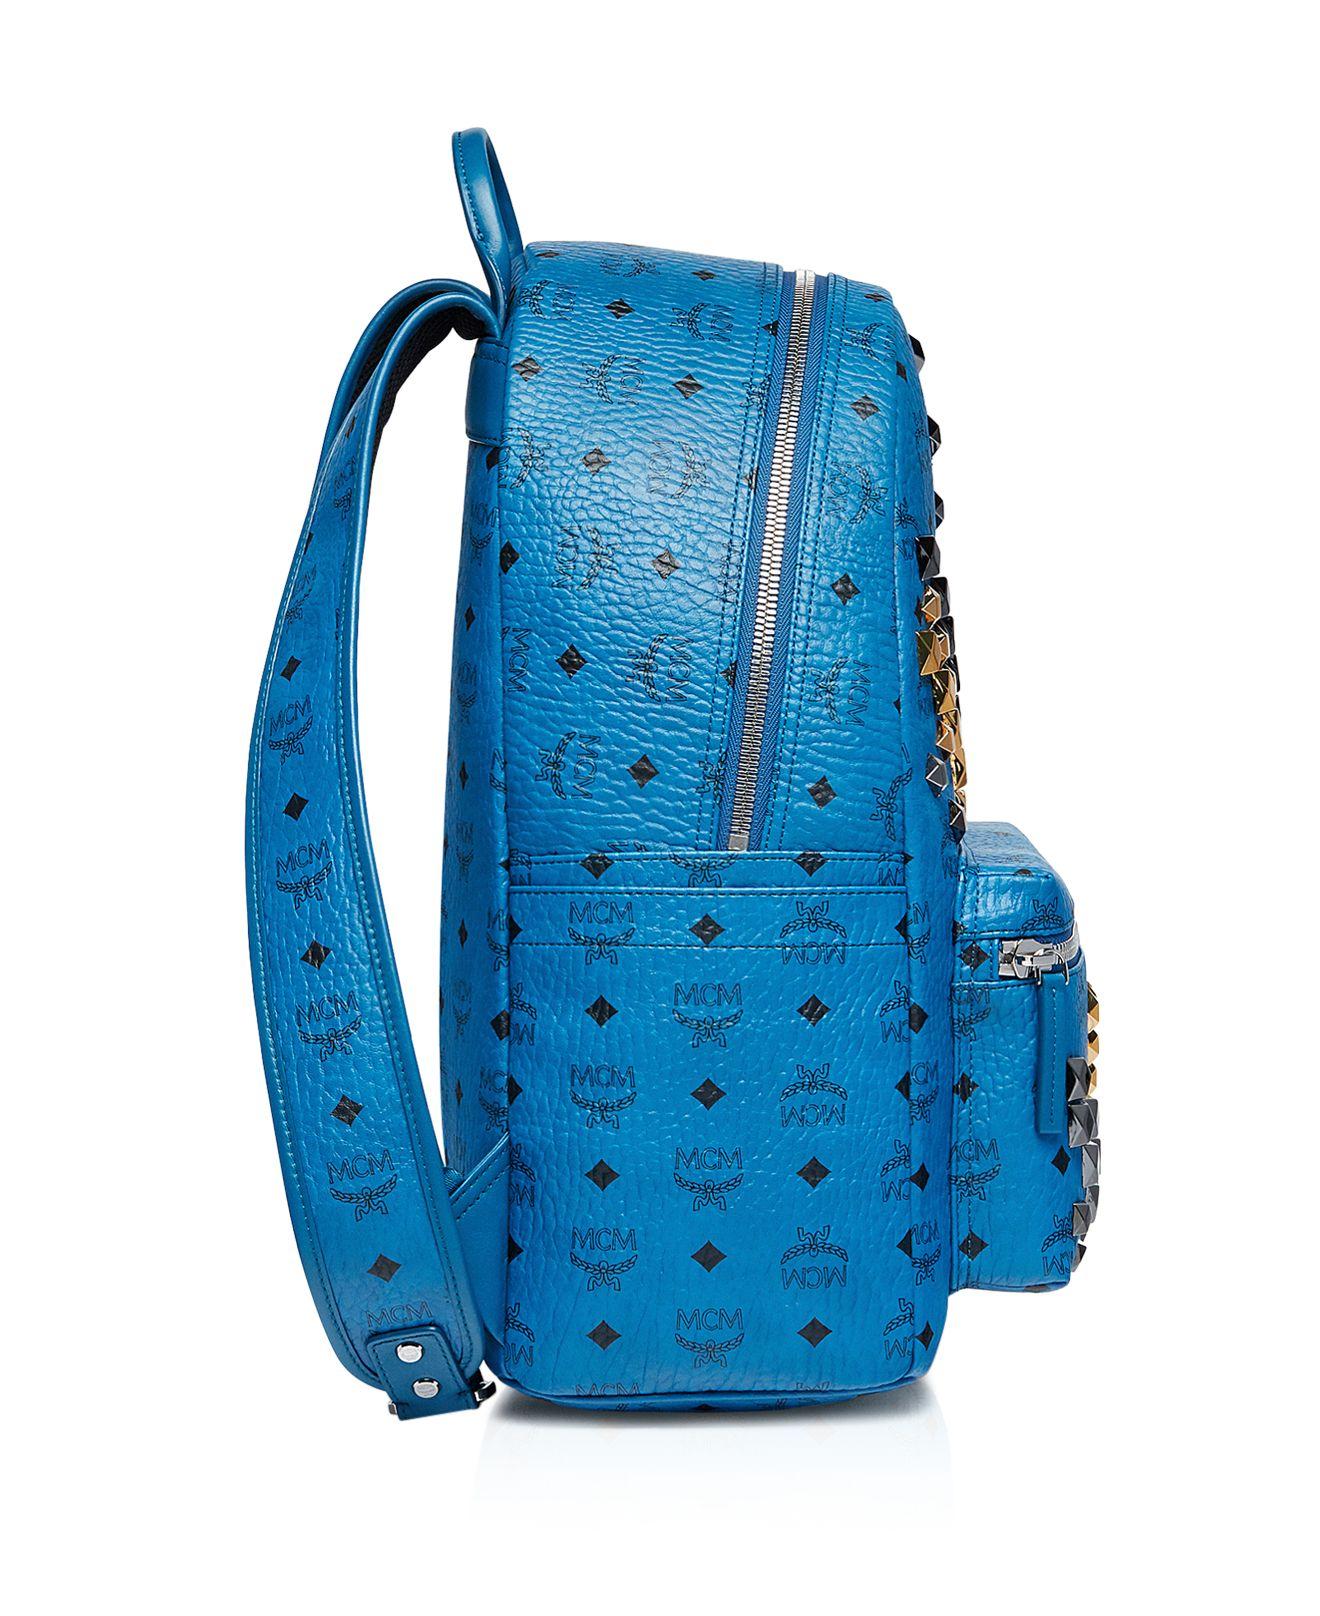 Lyst - Mcm Medium Studded Backpack in Blue